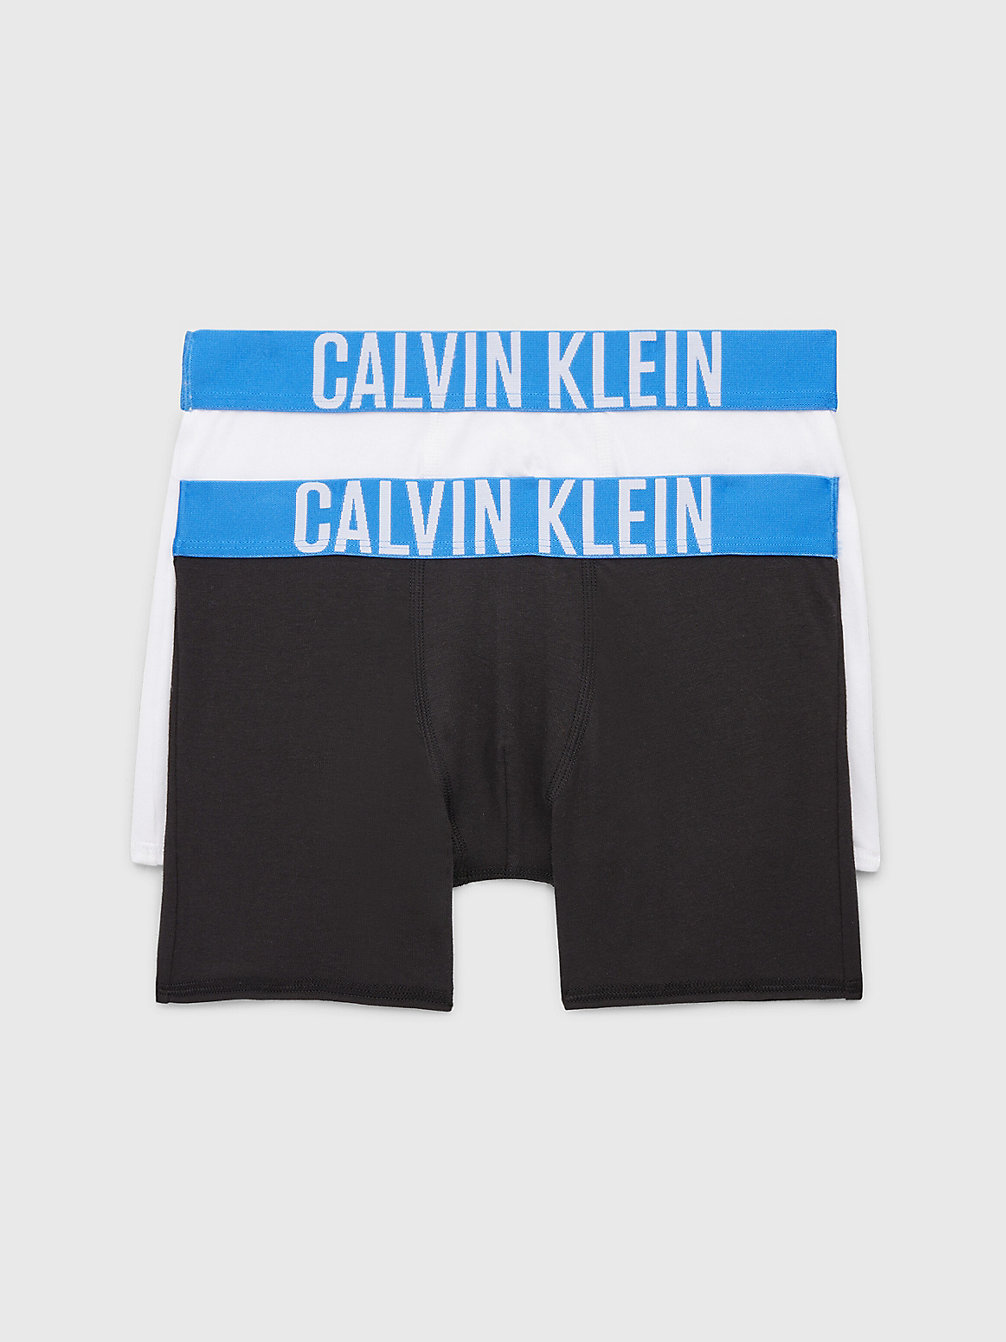 PVHBLACK/PVHWHITE Lot De 2 Boxers Pour Garçon - Intense Power undefined garcons Calvin Klein